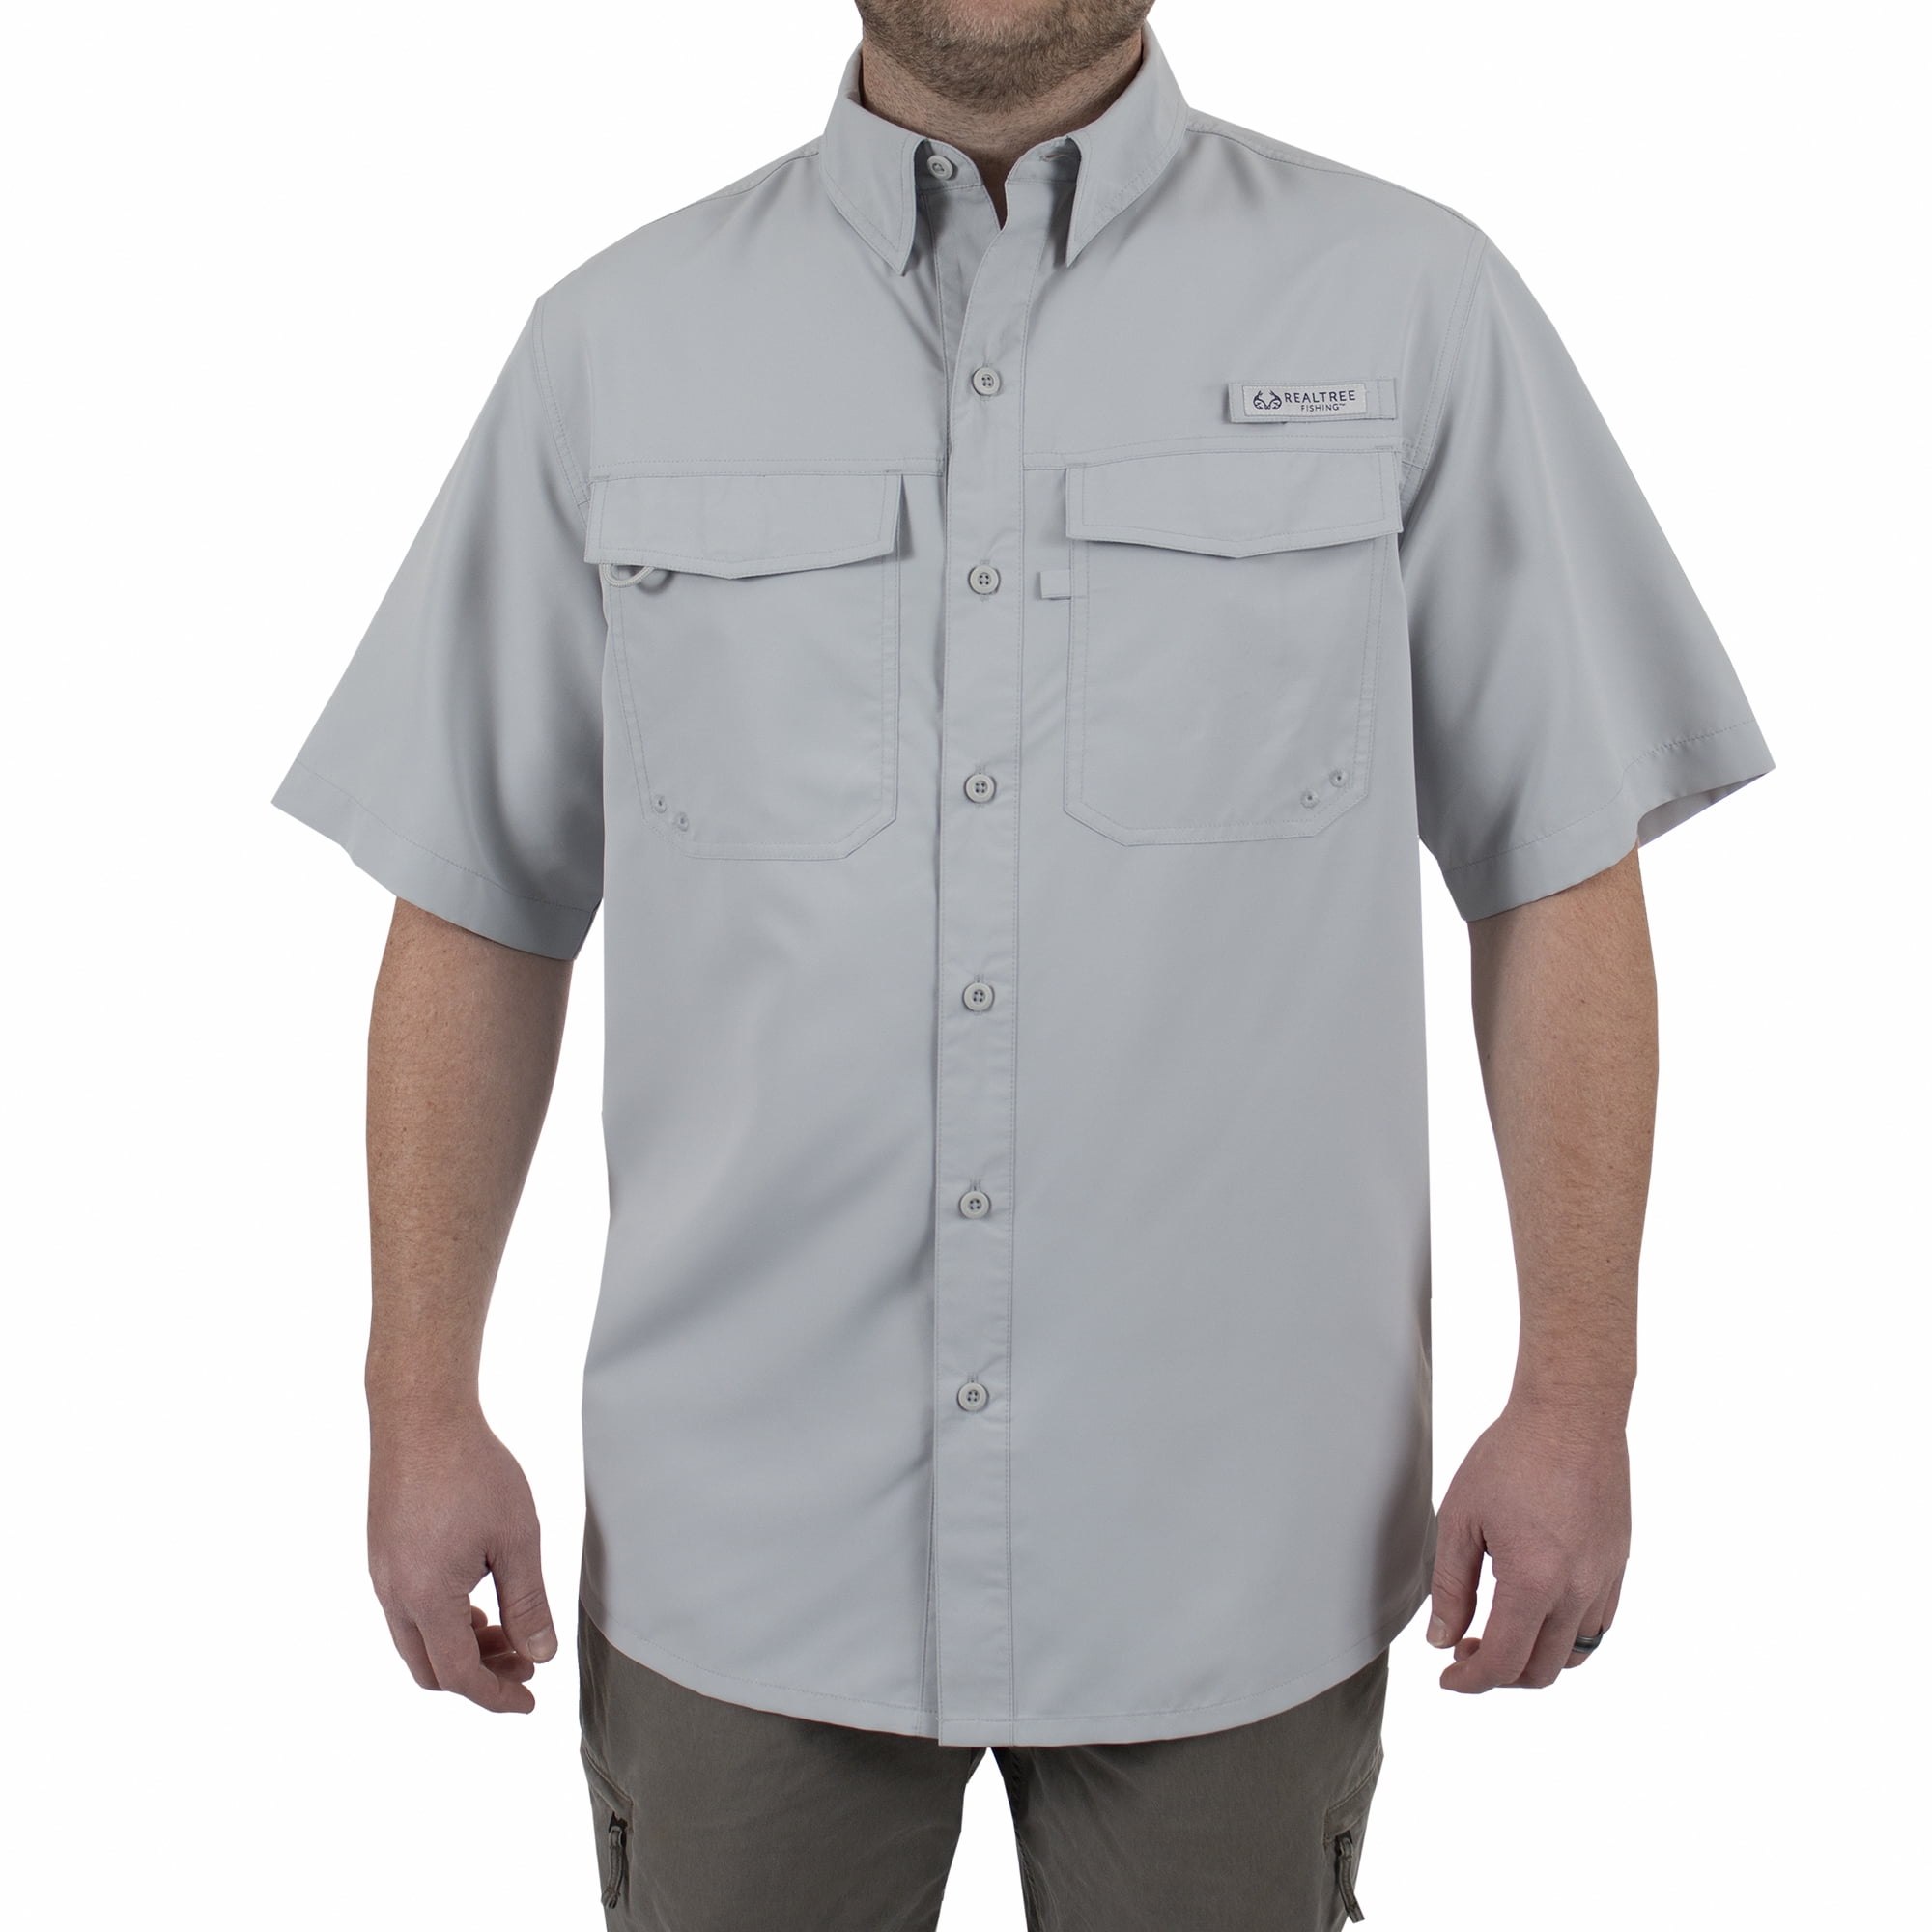 Realtree, Men's Short Sleeve Fishing Guide Shirt, Dusk, Size Extra ...